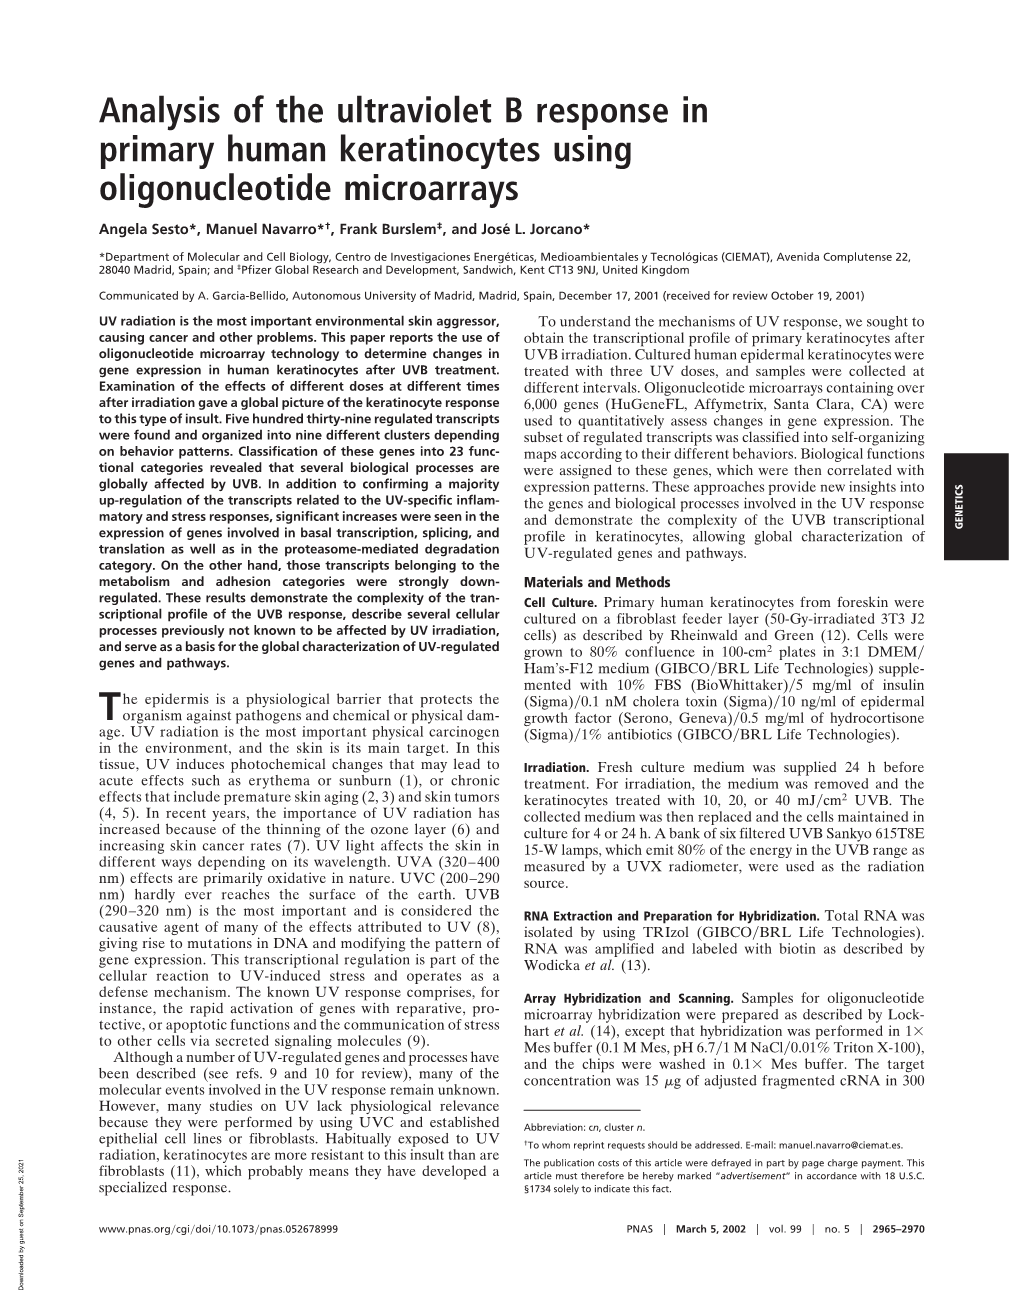 Analysis of the Ultraviolet B Response in Primary Human Keratinocytes Using Oligonucleotide Microarrays